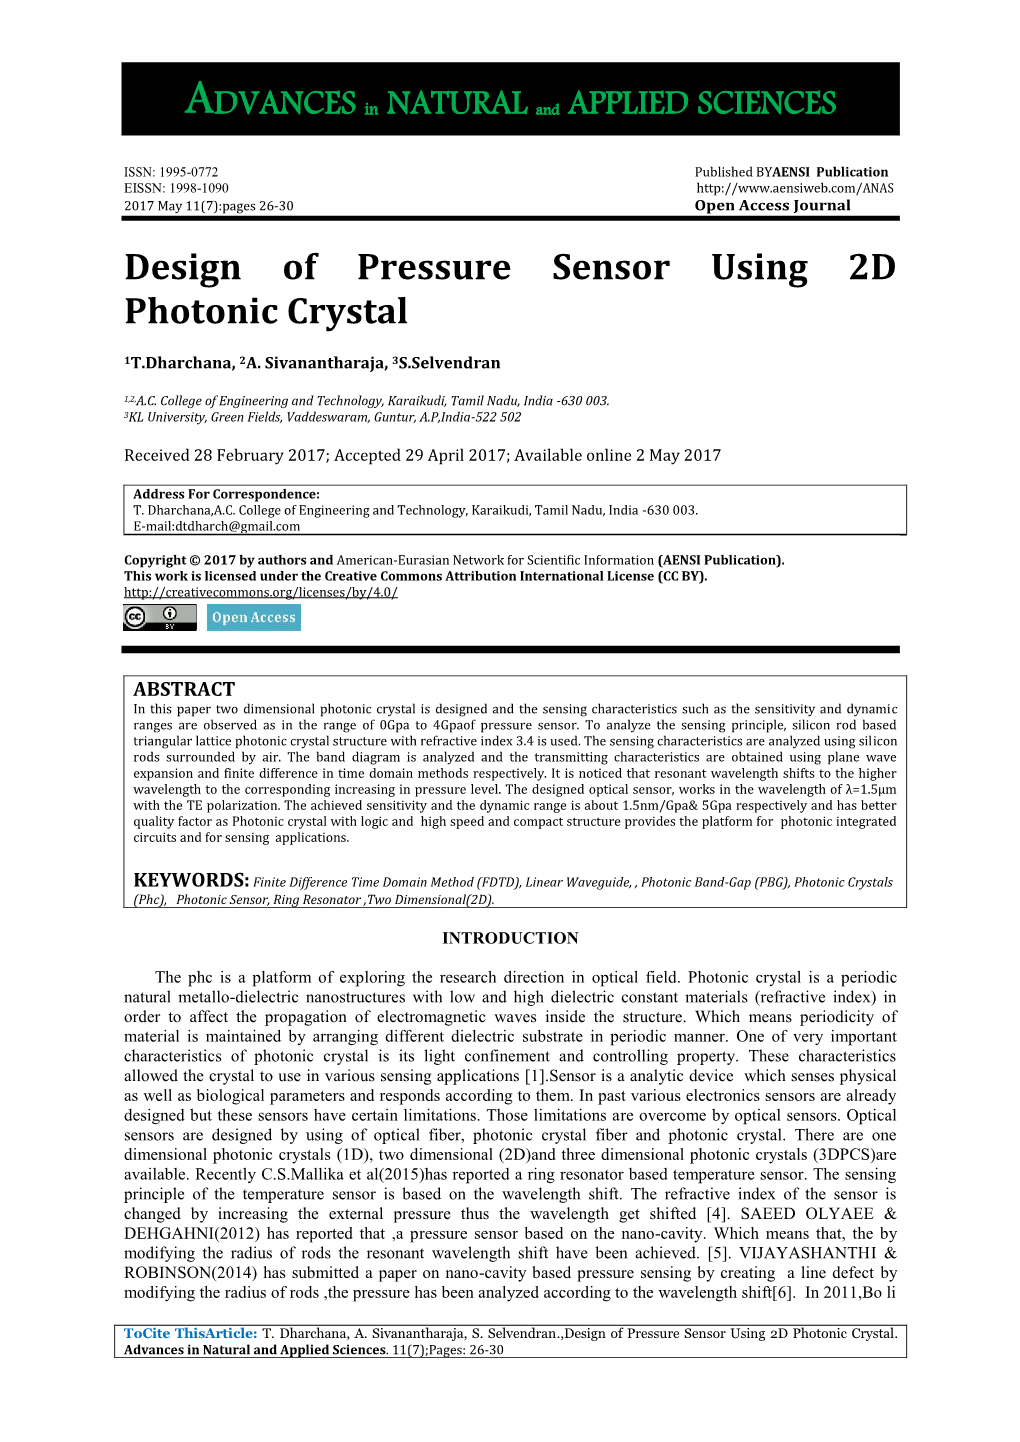 Design of Pressure Sensor Using 2D Photonic Crystal